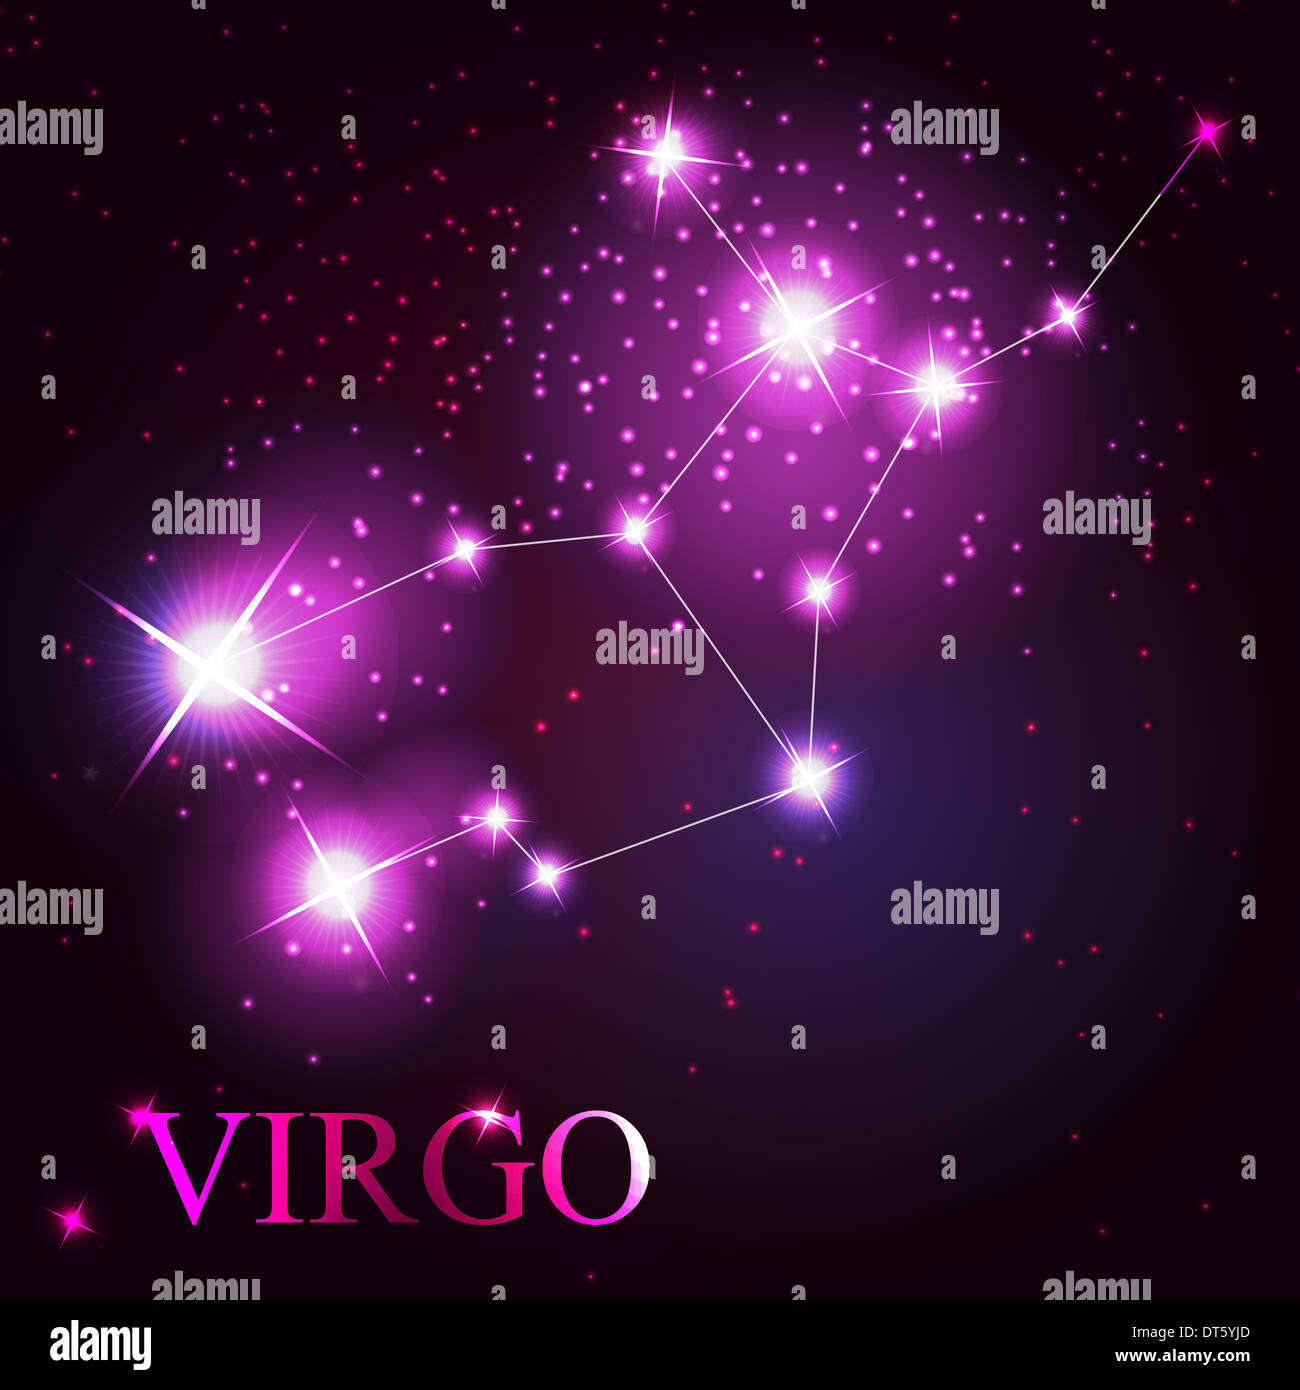 Virgo traits and personality characteristics